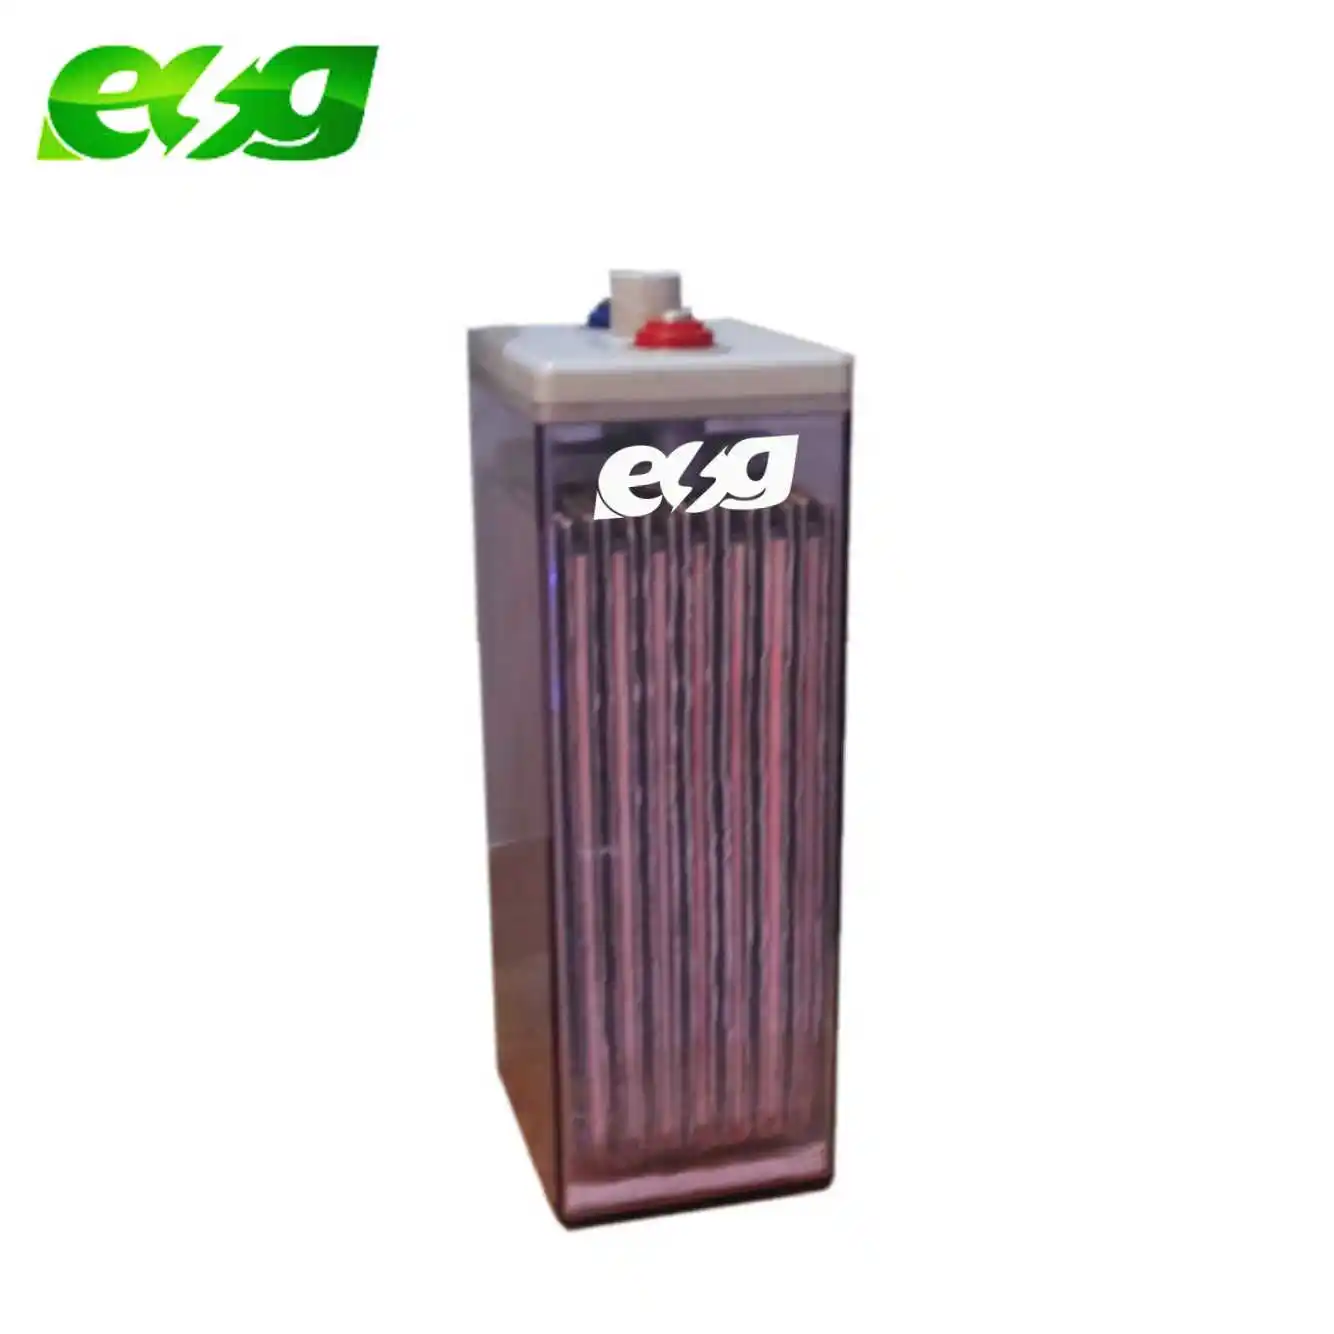 ESG 2v 500AH 600ah Sealed Lead-Acid Liquid Storage Box Charger OPZS Battery